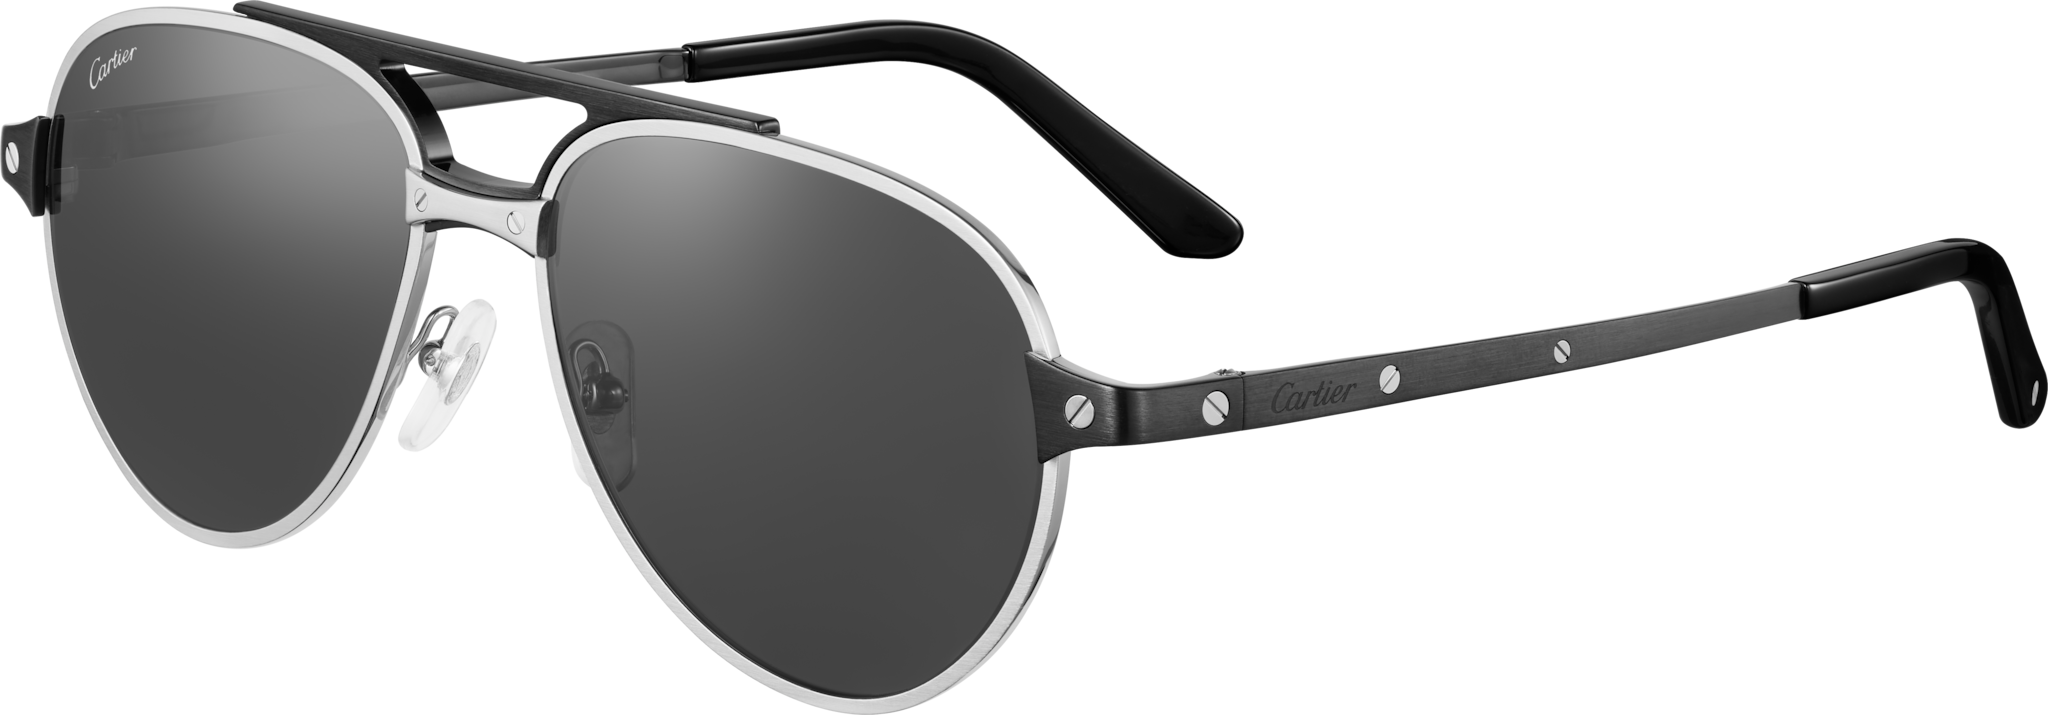 Santos de Cartier SunglassesBushed platinum finish metal, black lenses